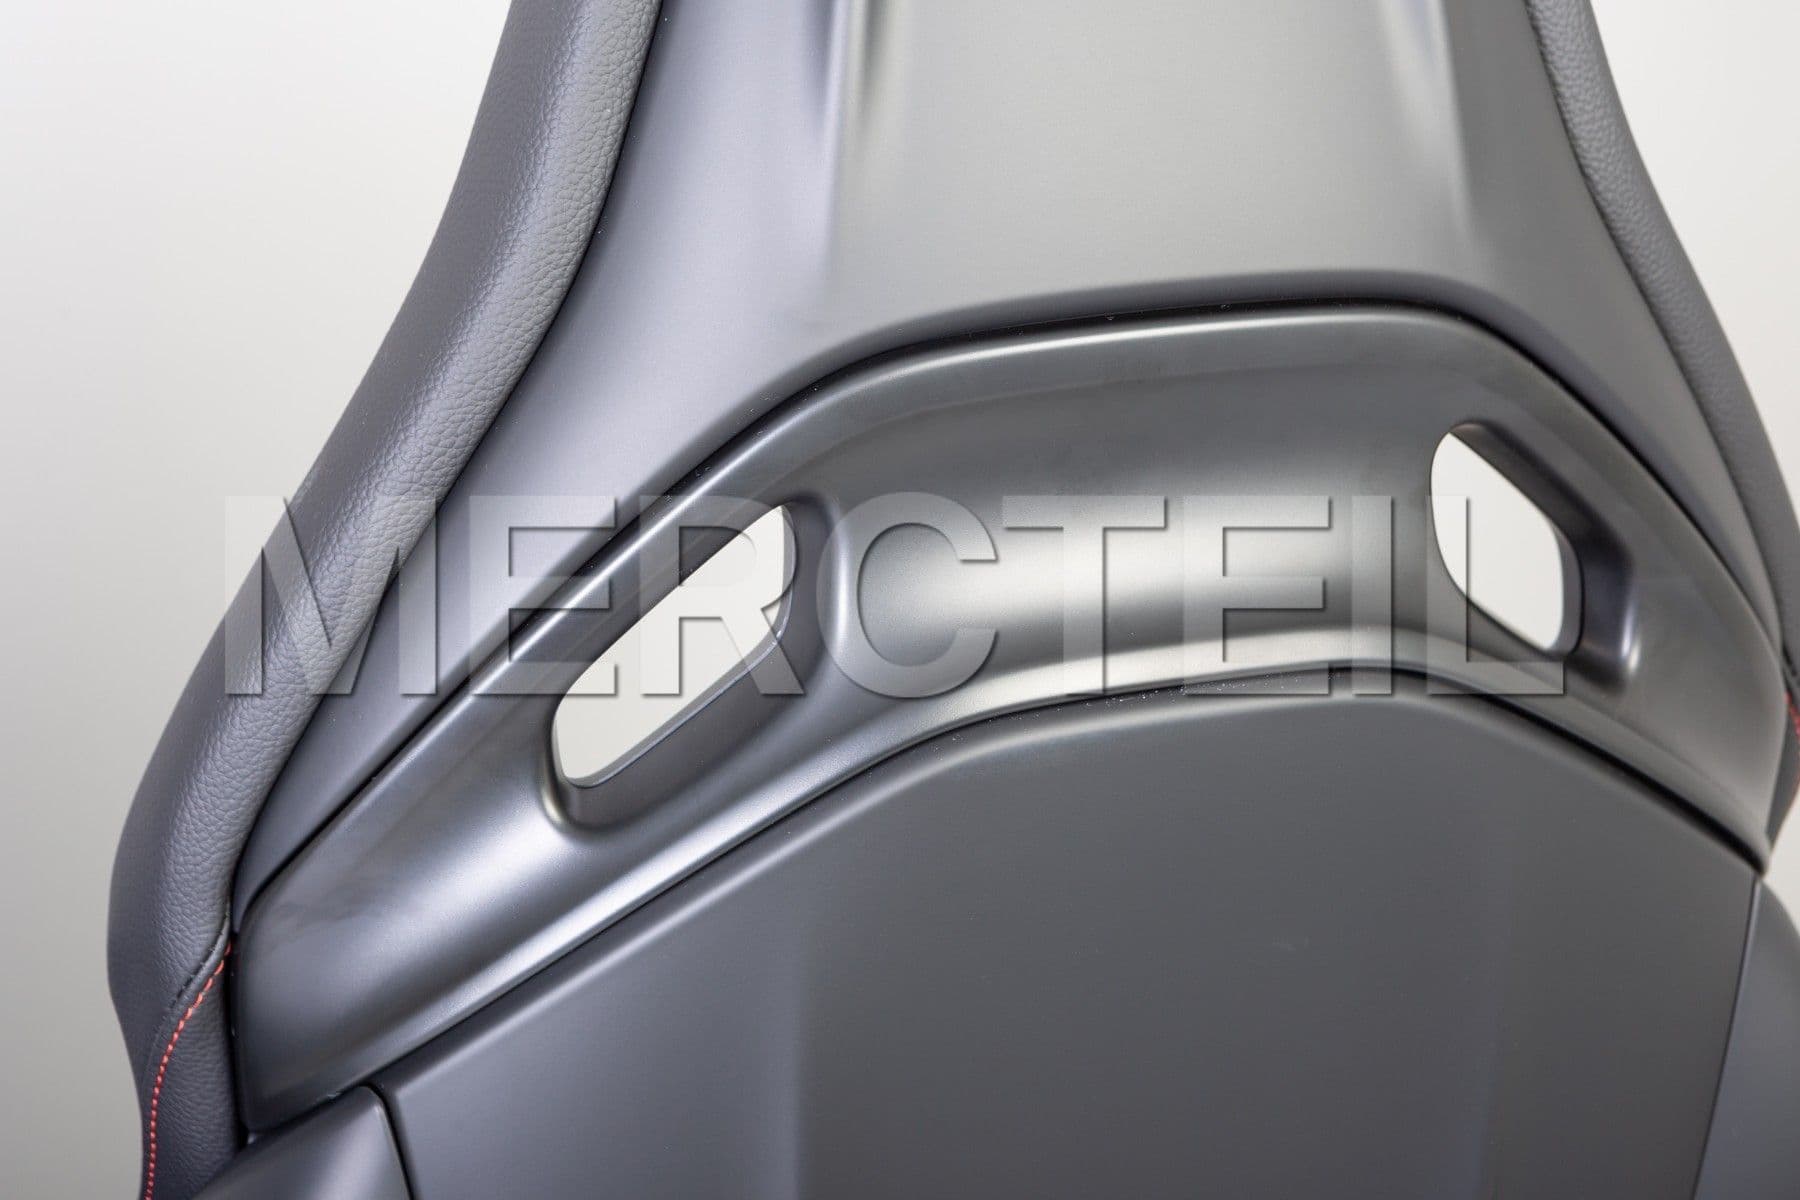 C63 AMG Black Alcantara Seats W205 Genuine Mercedes AMG